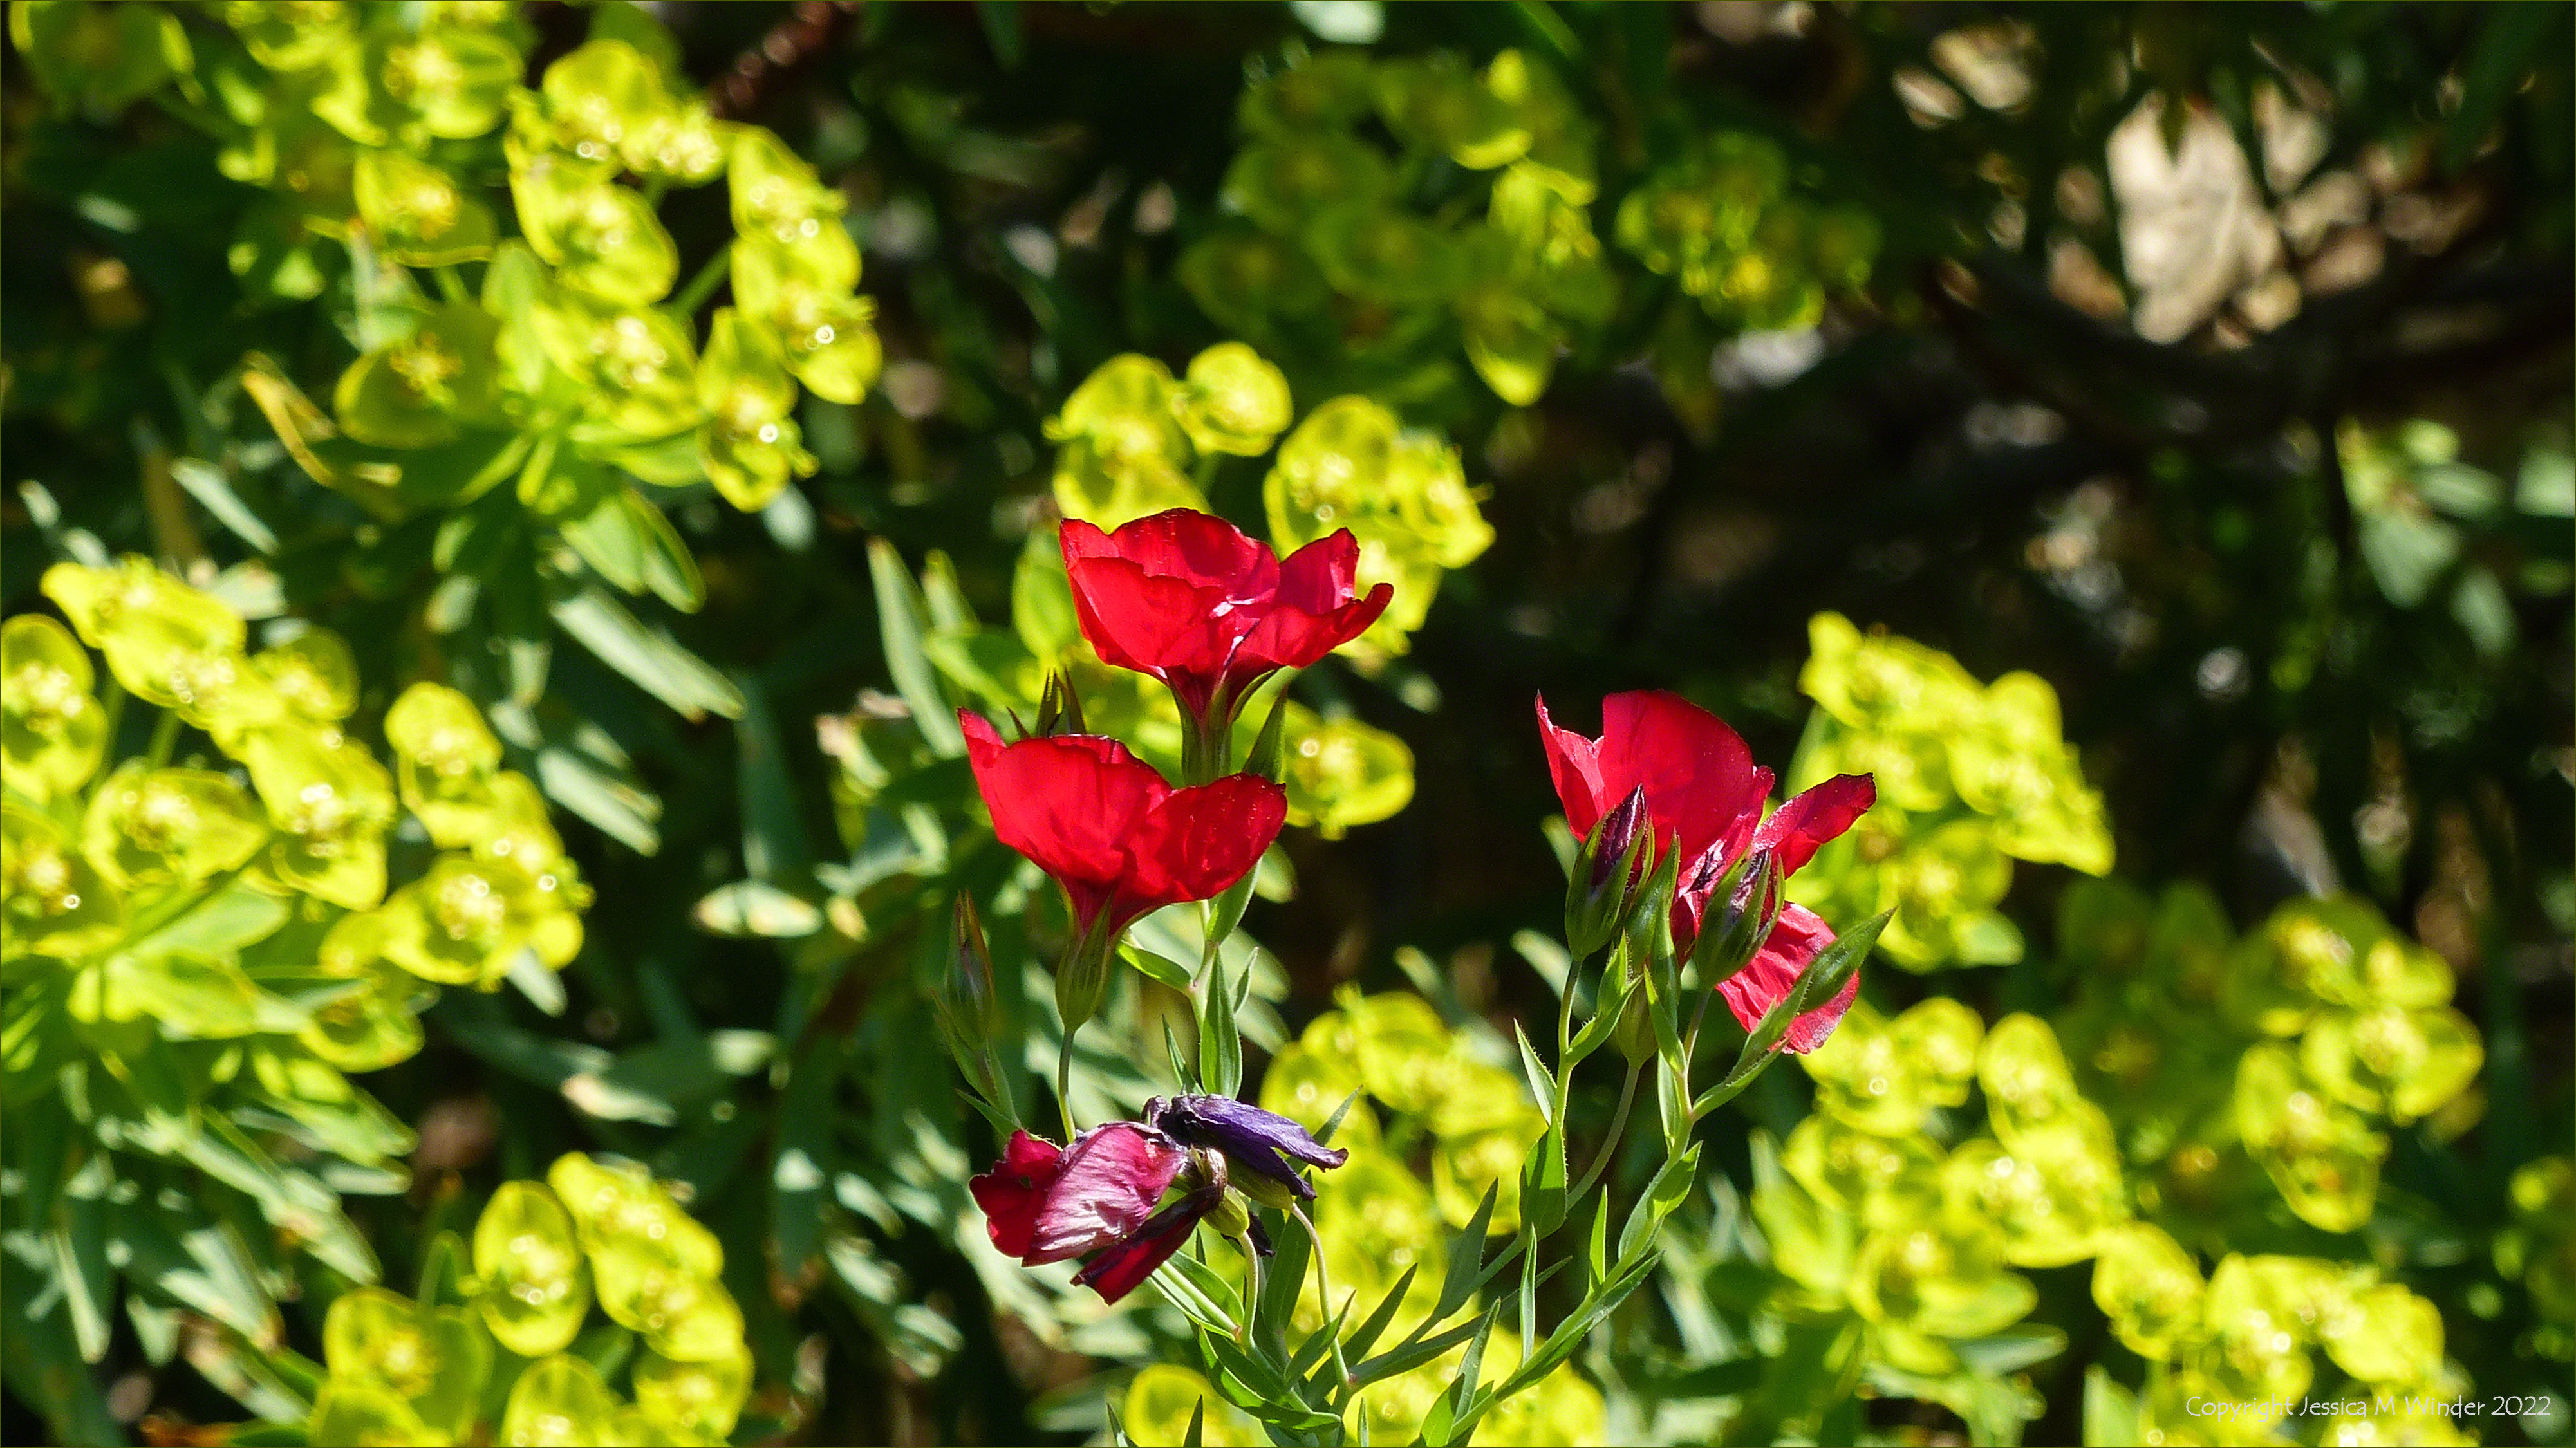 Red flowers against yellowy green ones in a Mediterranean garden